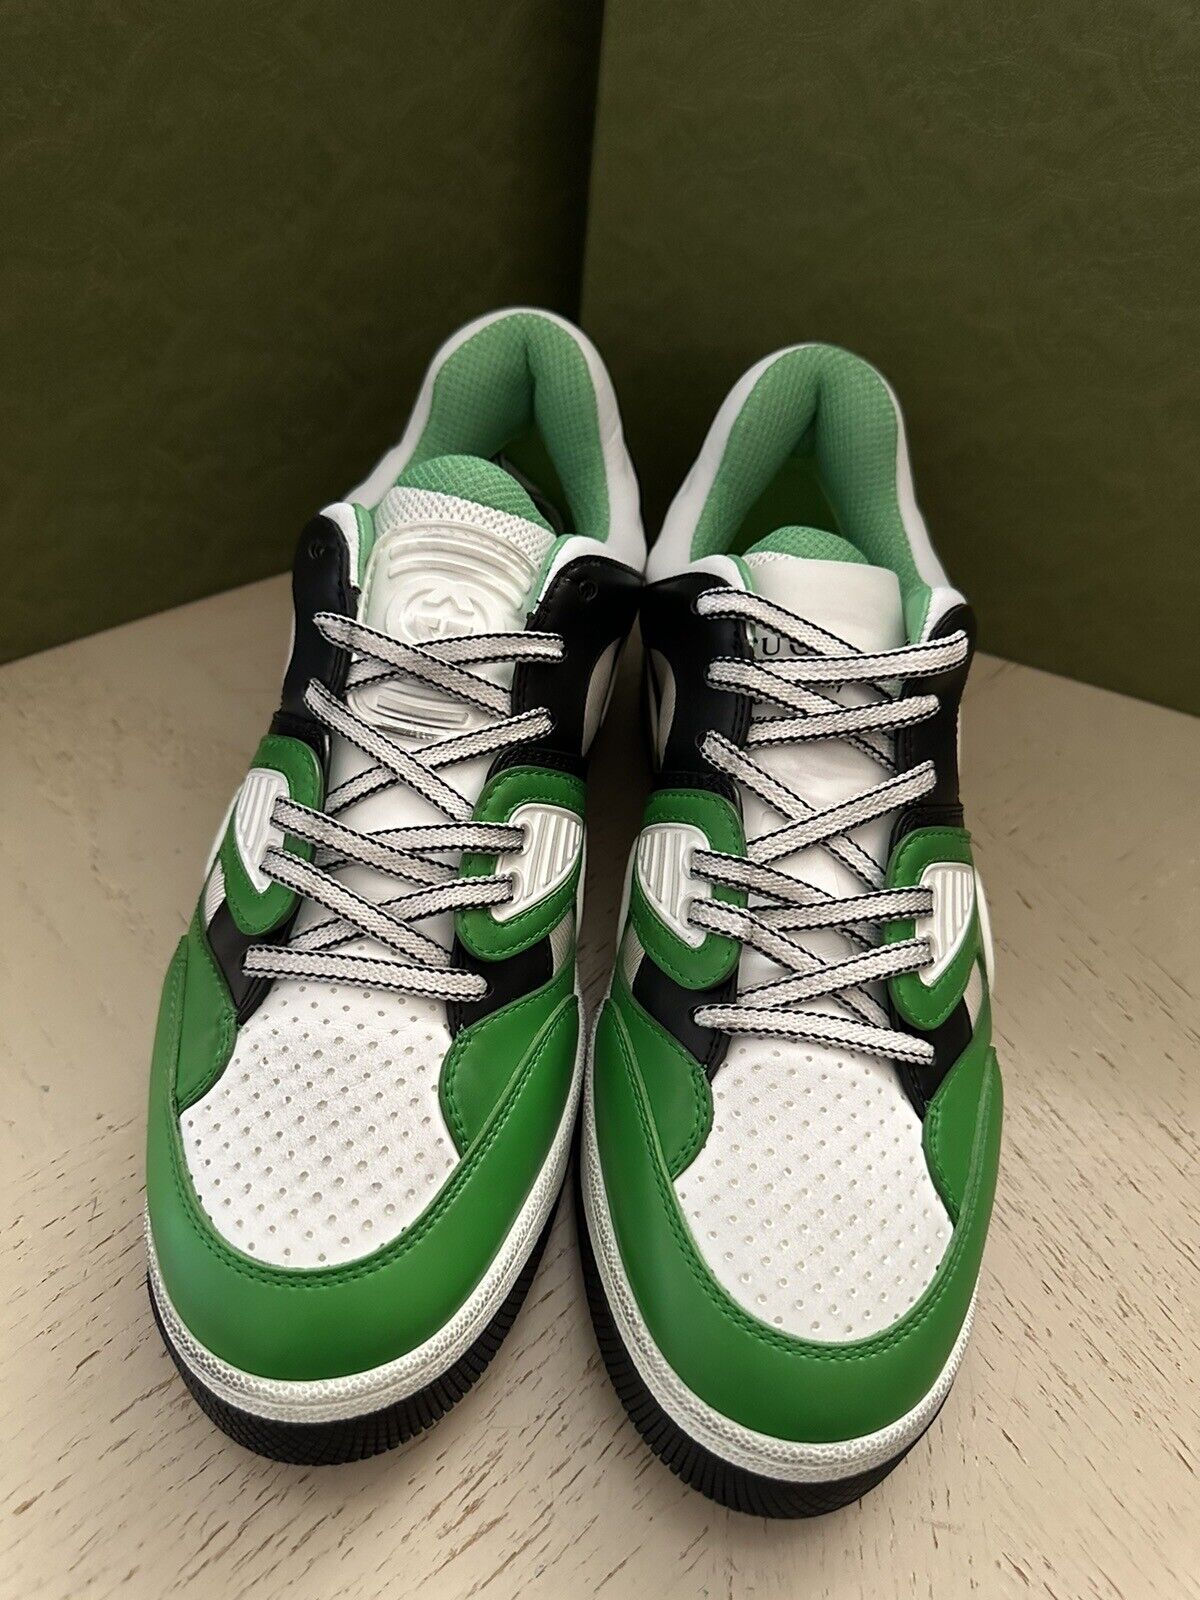 New $950 Gucci Men Demetra Basket Low Top Sneakers Green/Whi 8.5 US/8 UK 697882